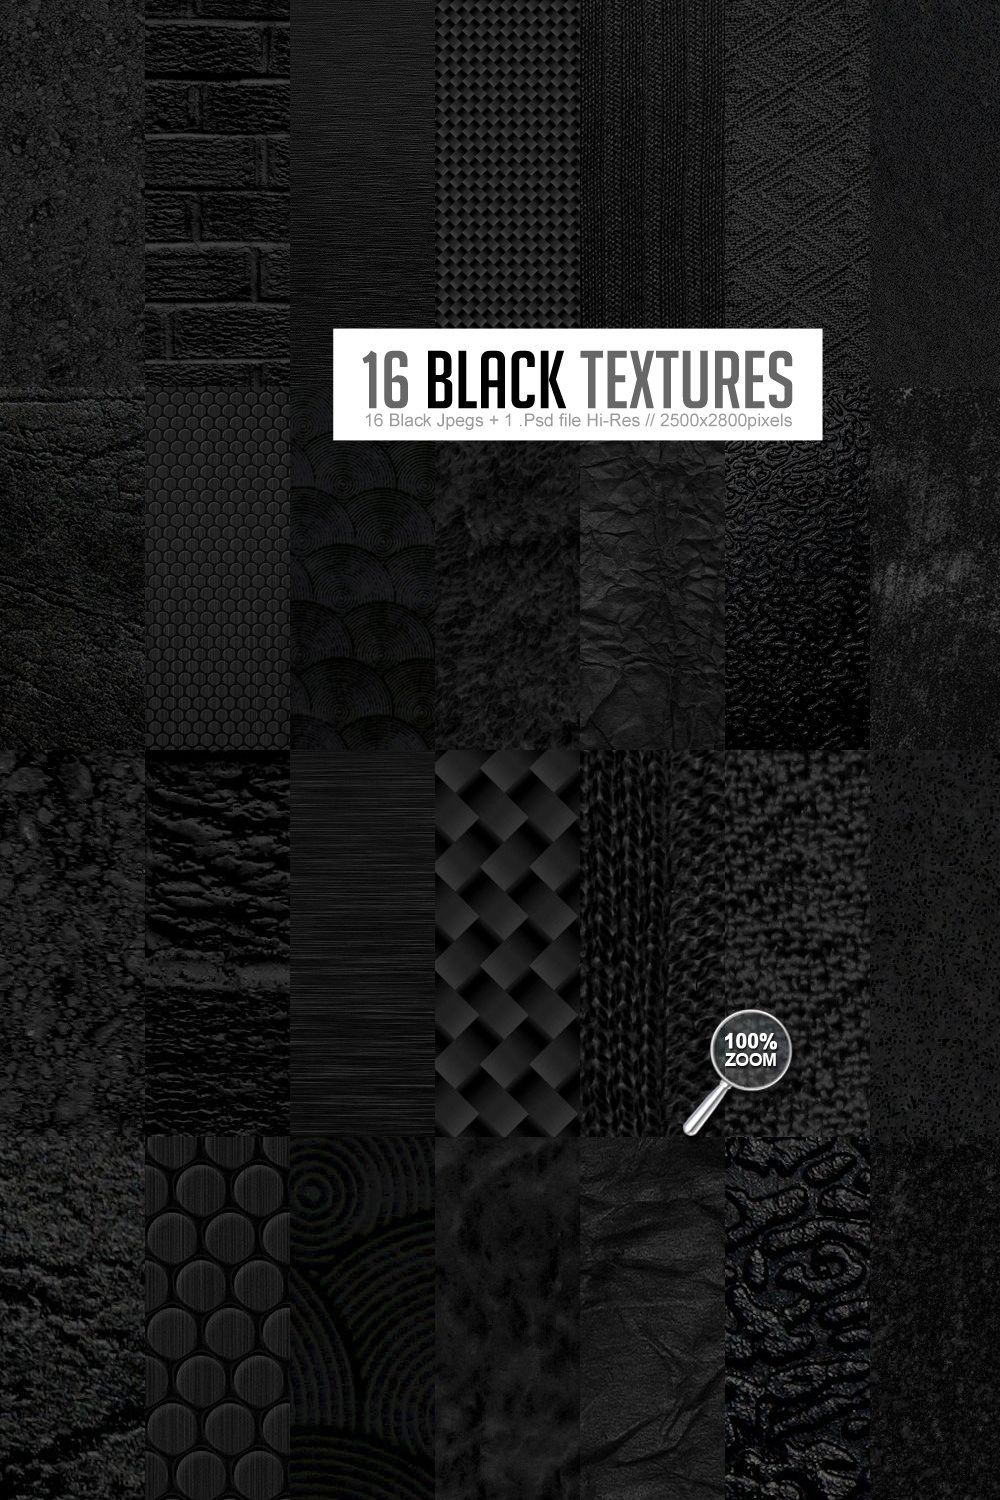 16 BLACK Textures pinterest preview image.